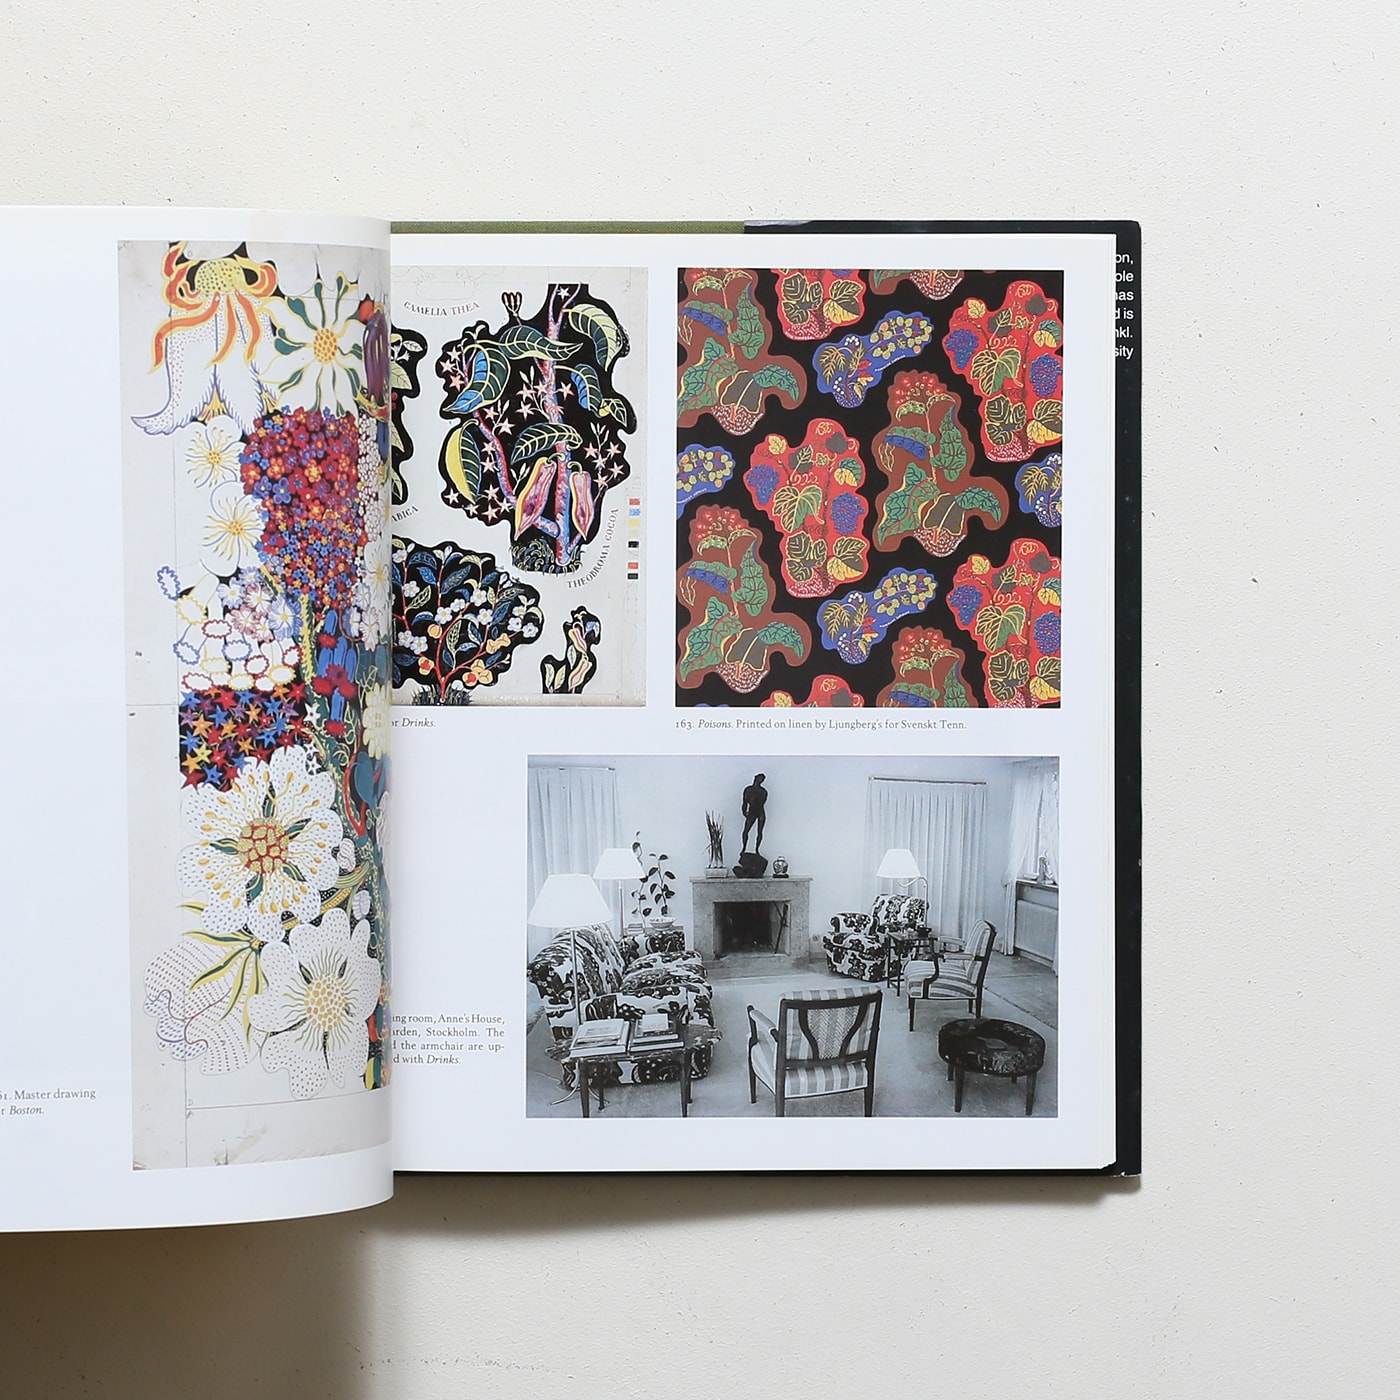 Josef Frank: Textile Designs